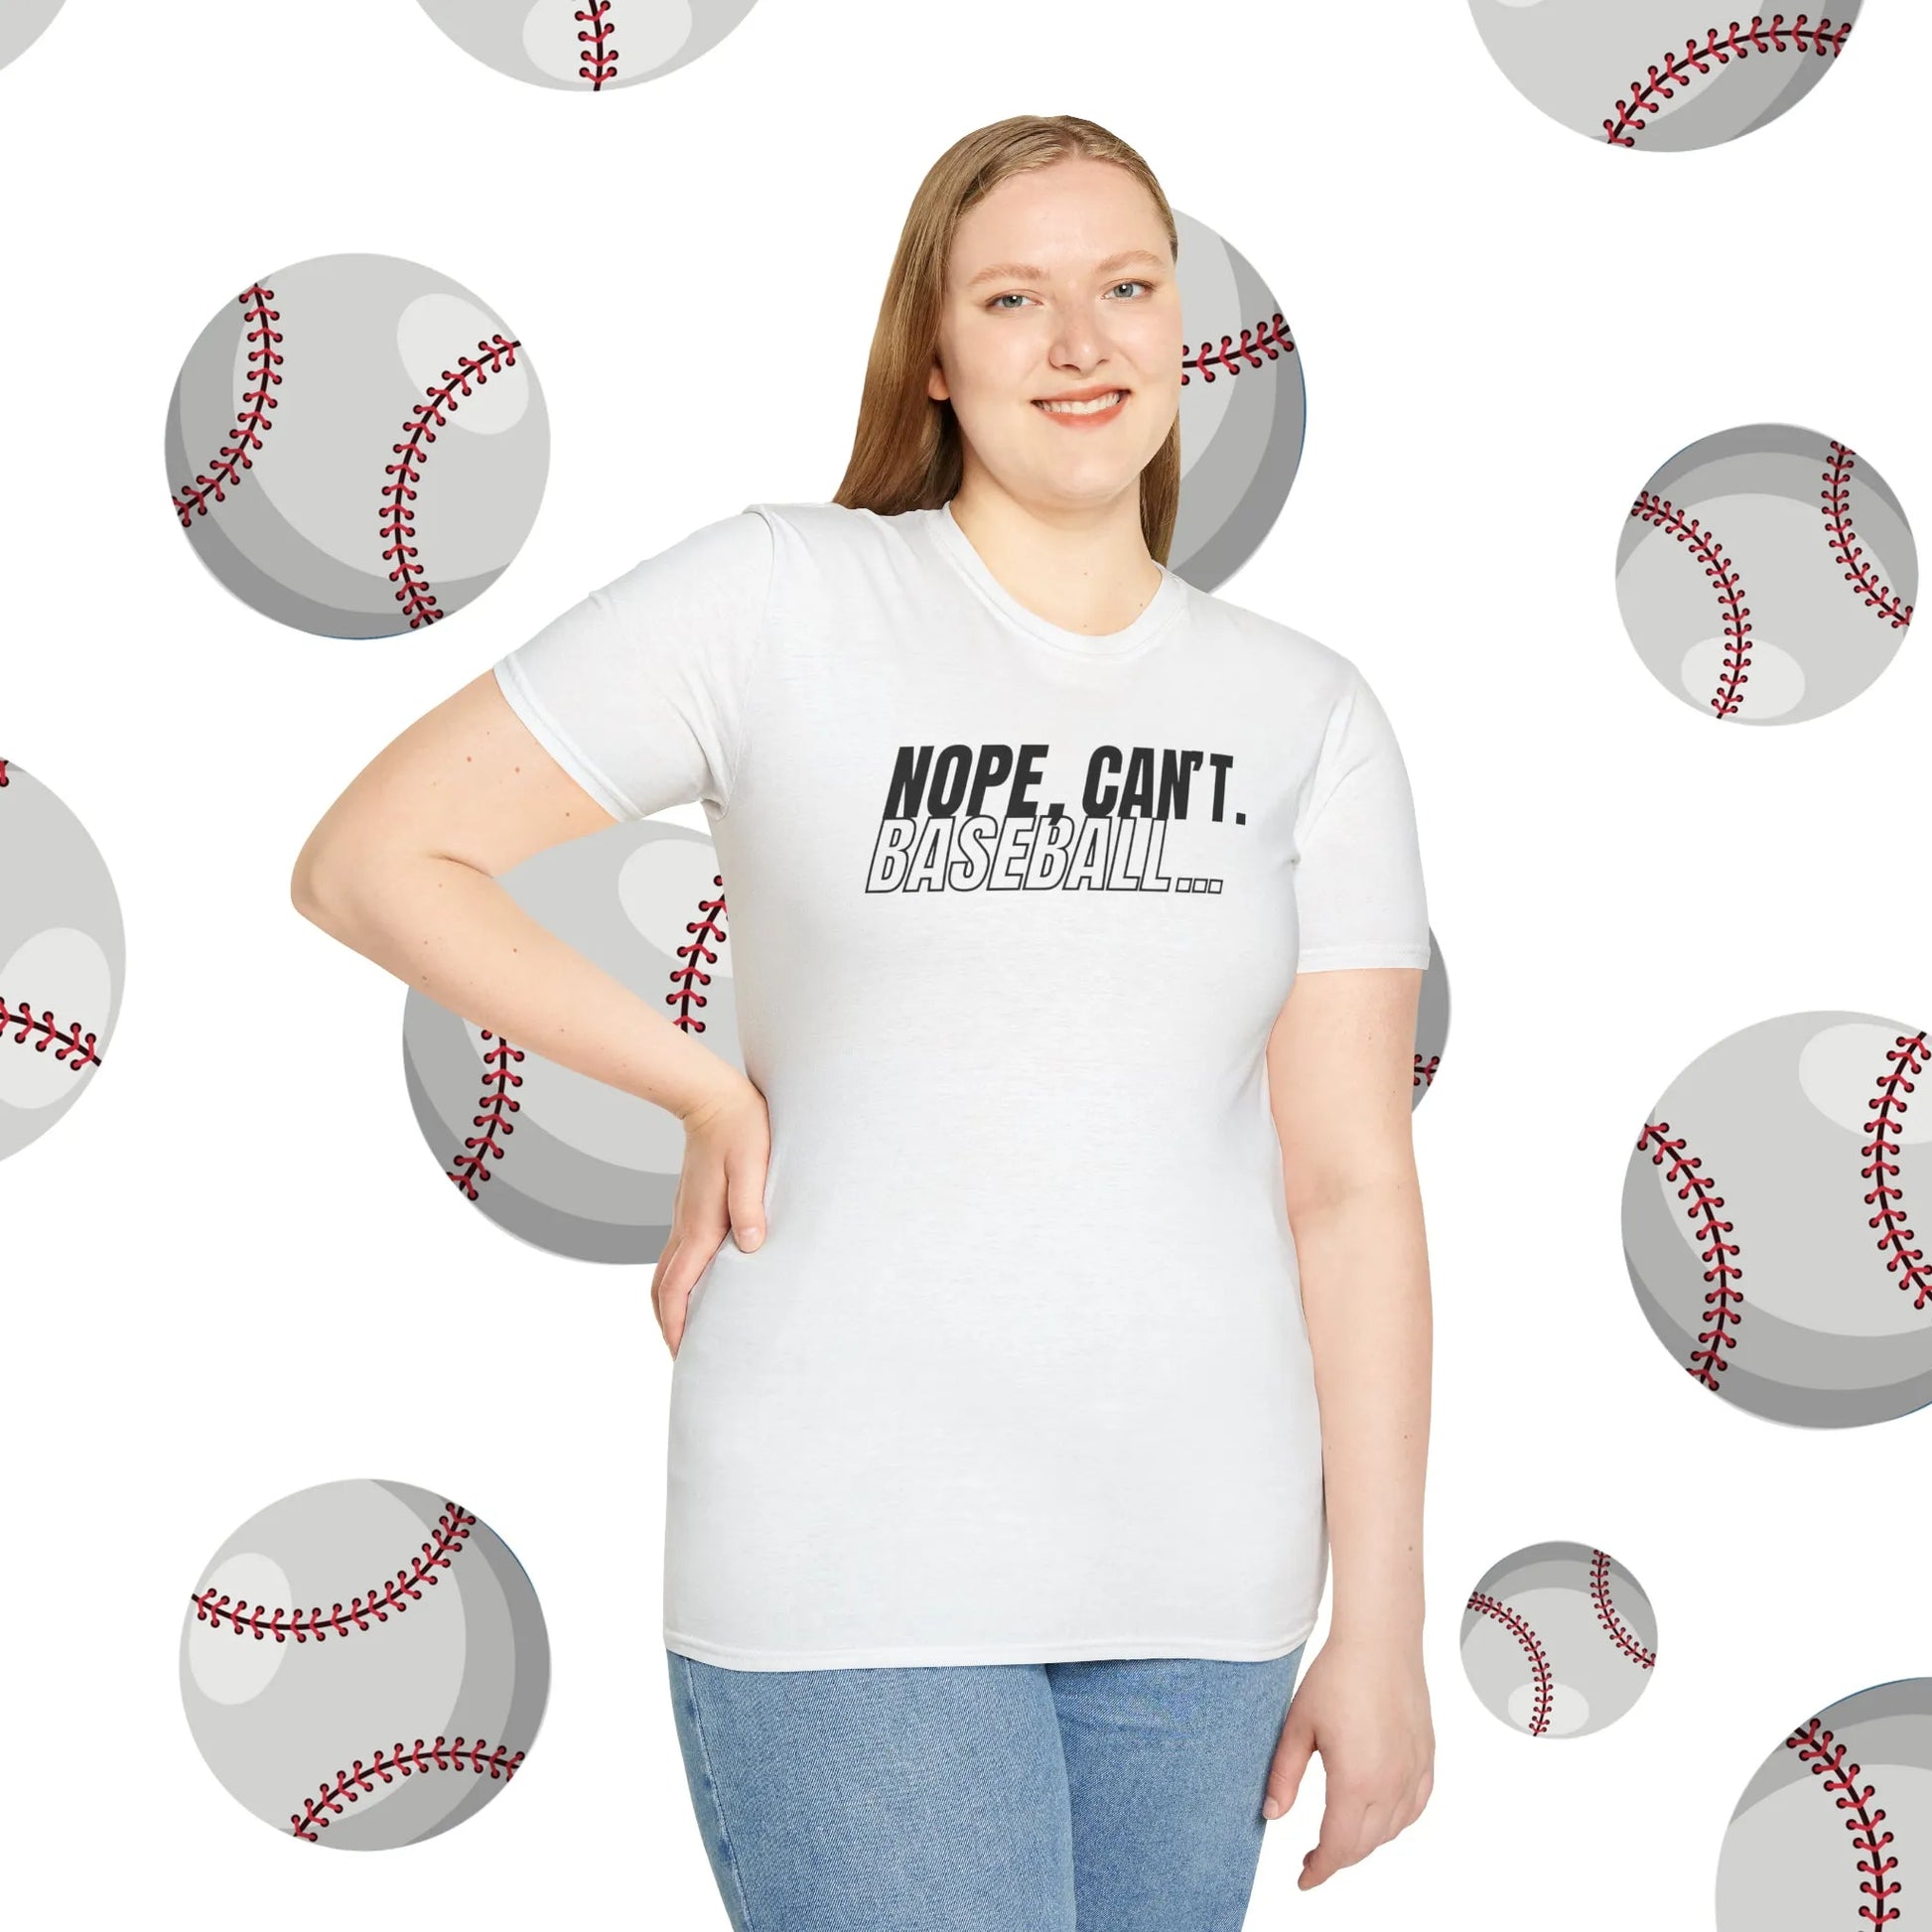 Nope, Can't. Baseball... Tshirt - Funny Baseball Shirt - Nope Can't Baseball Shirt White Front Female